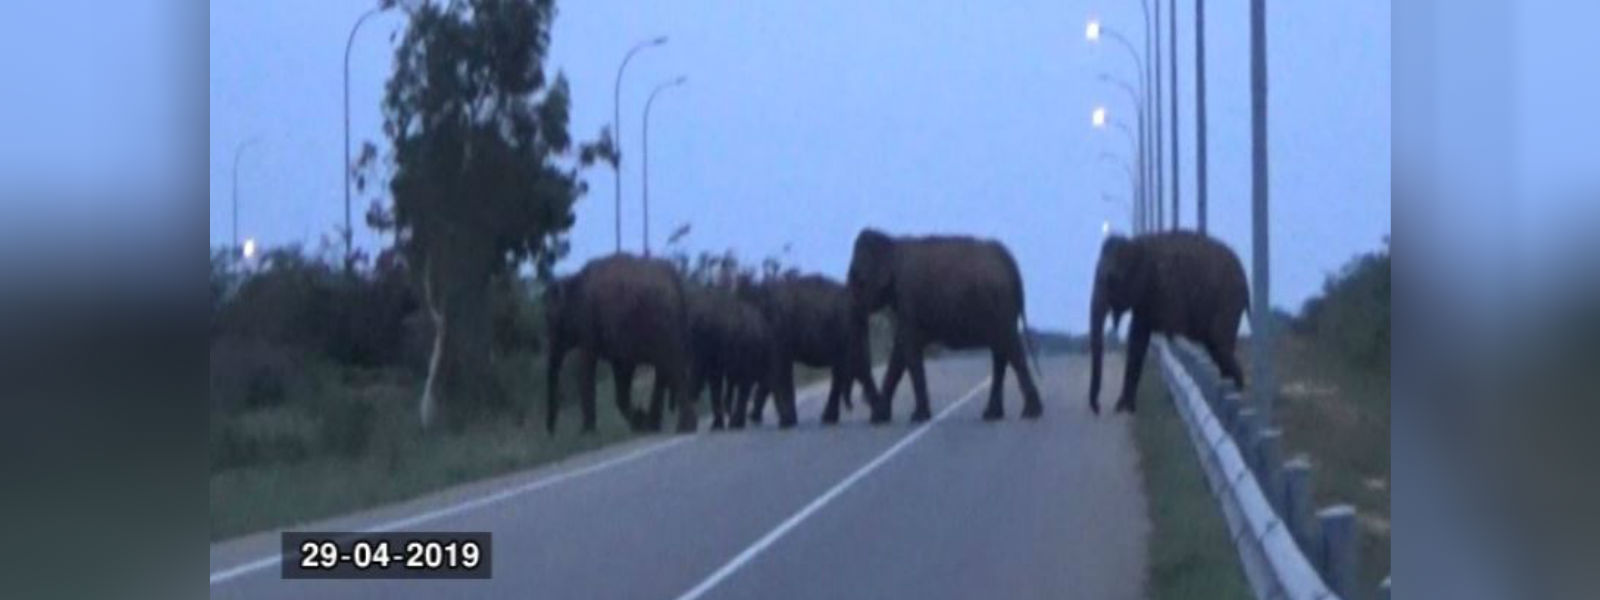 Elephant threats in Hambantota